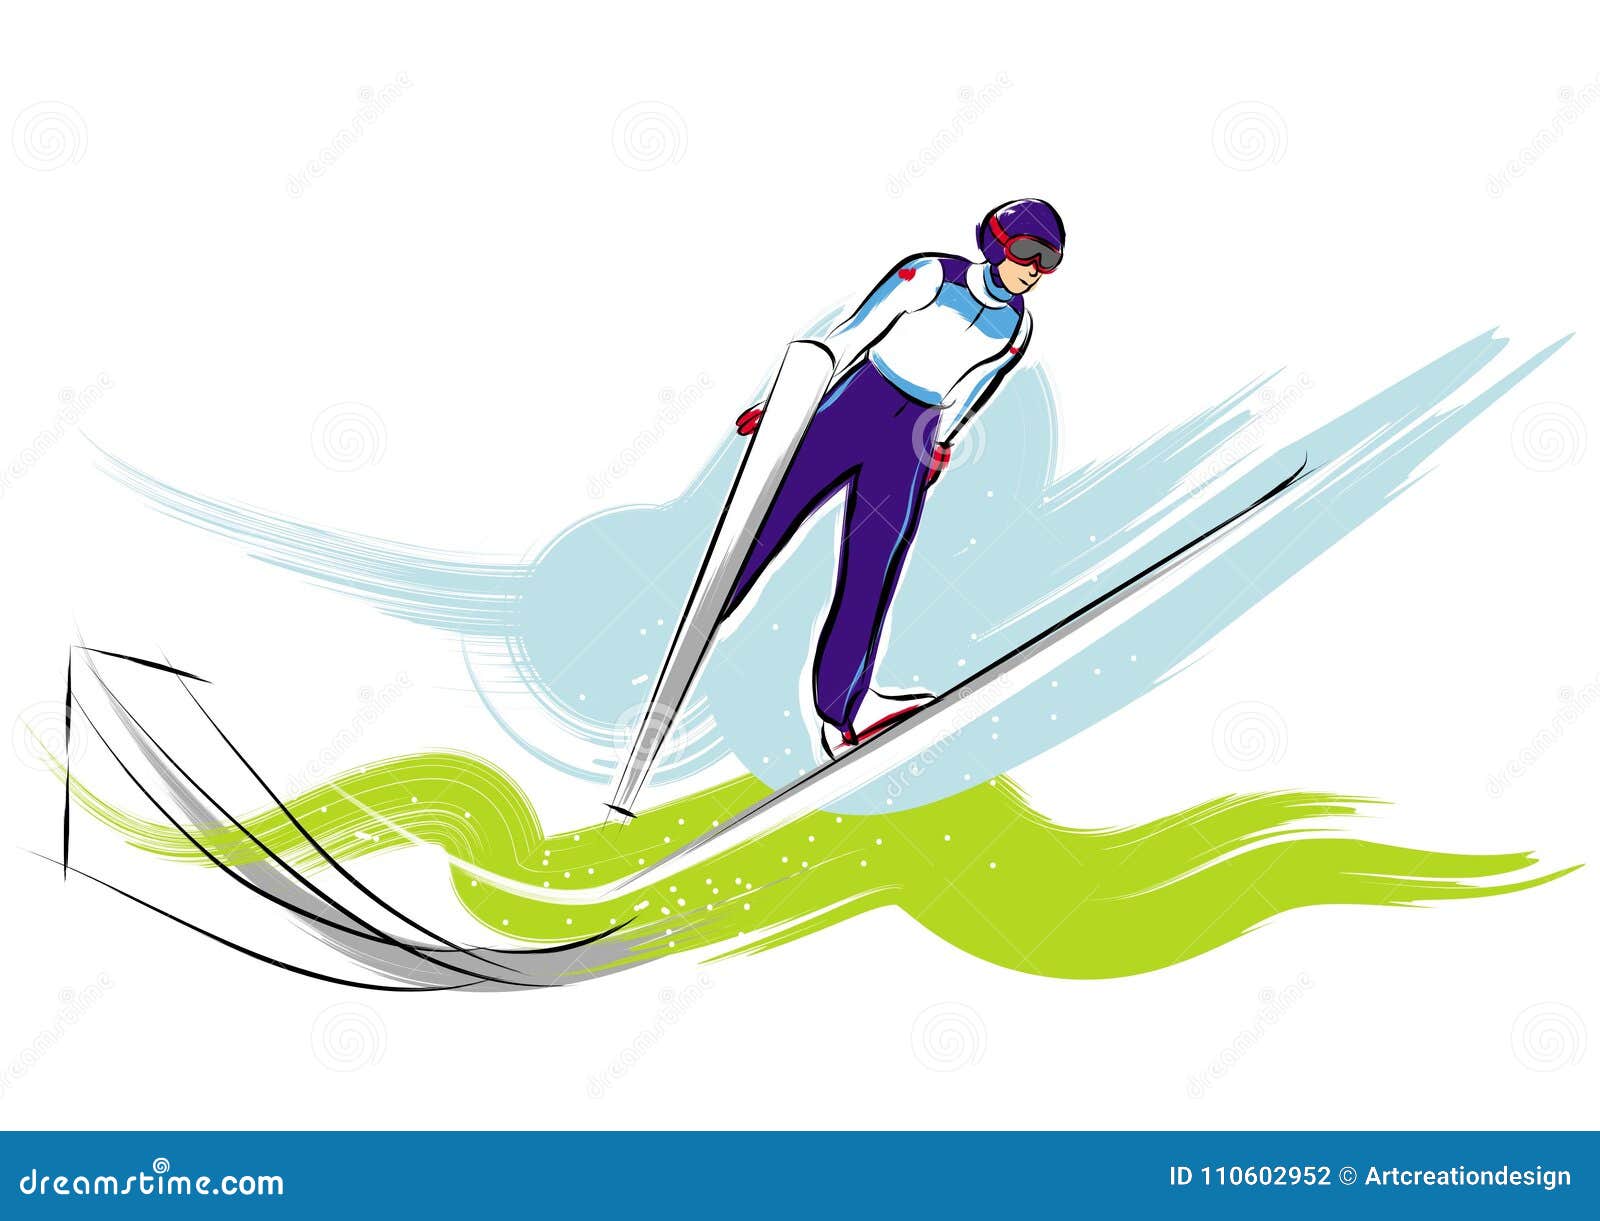 ski jumper olympic games